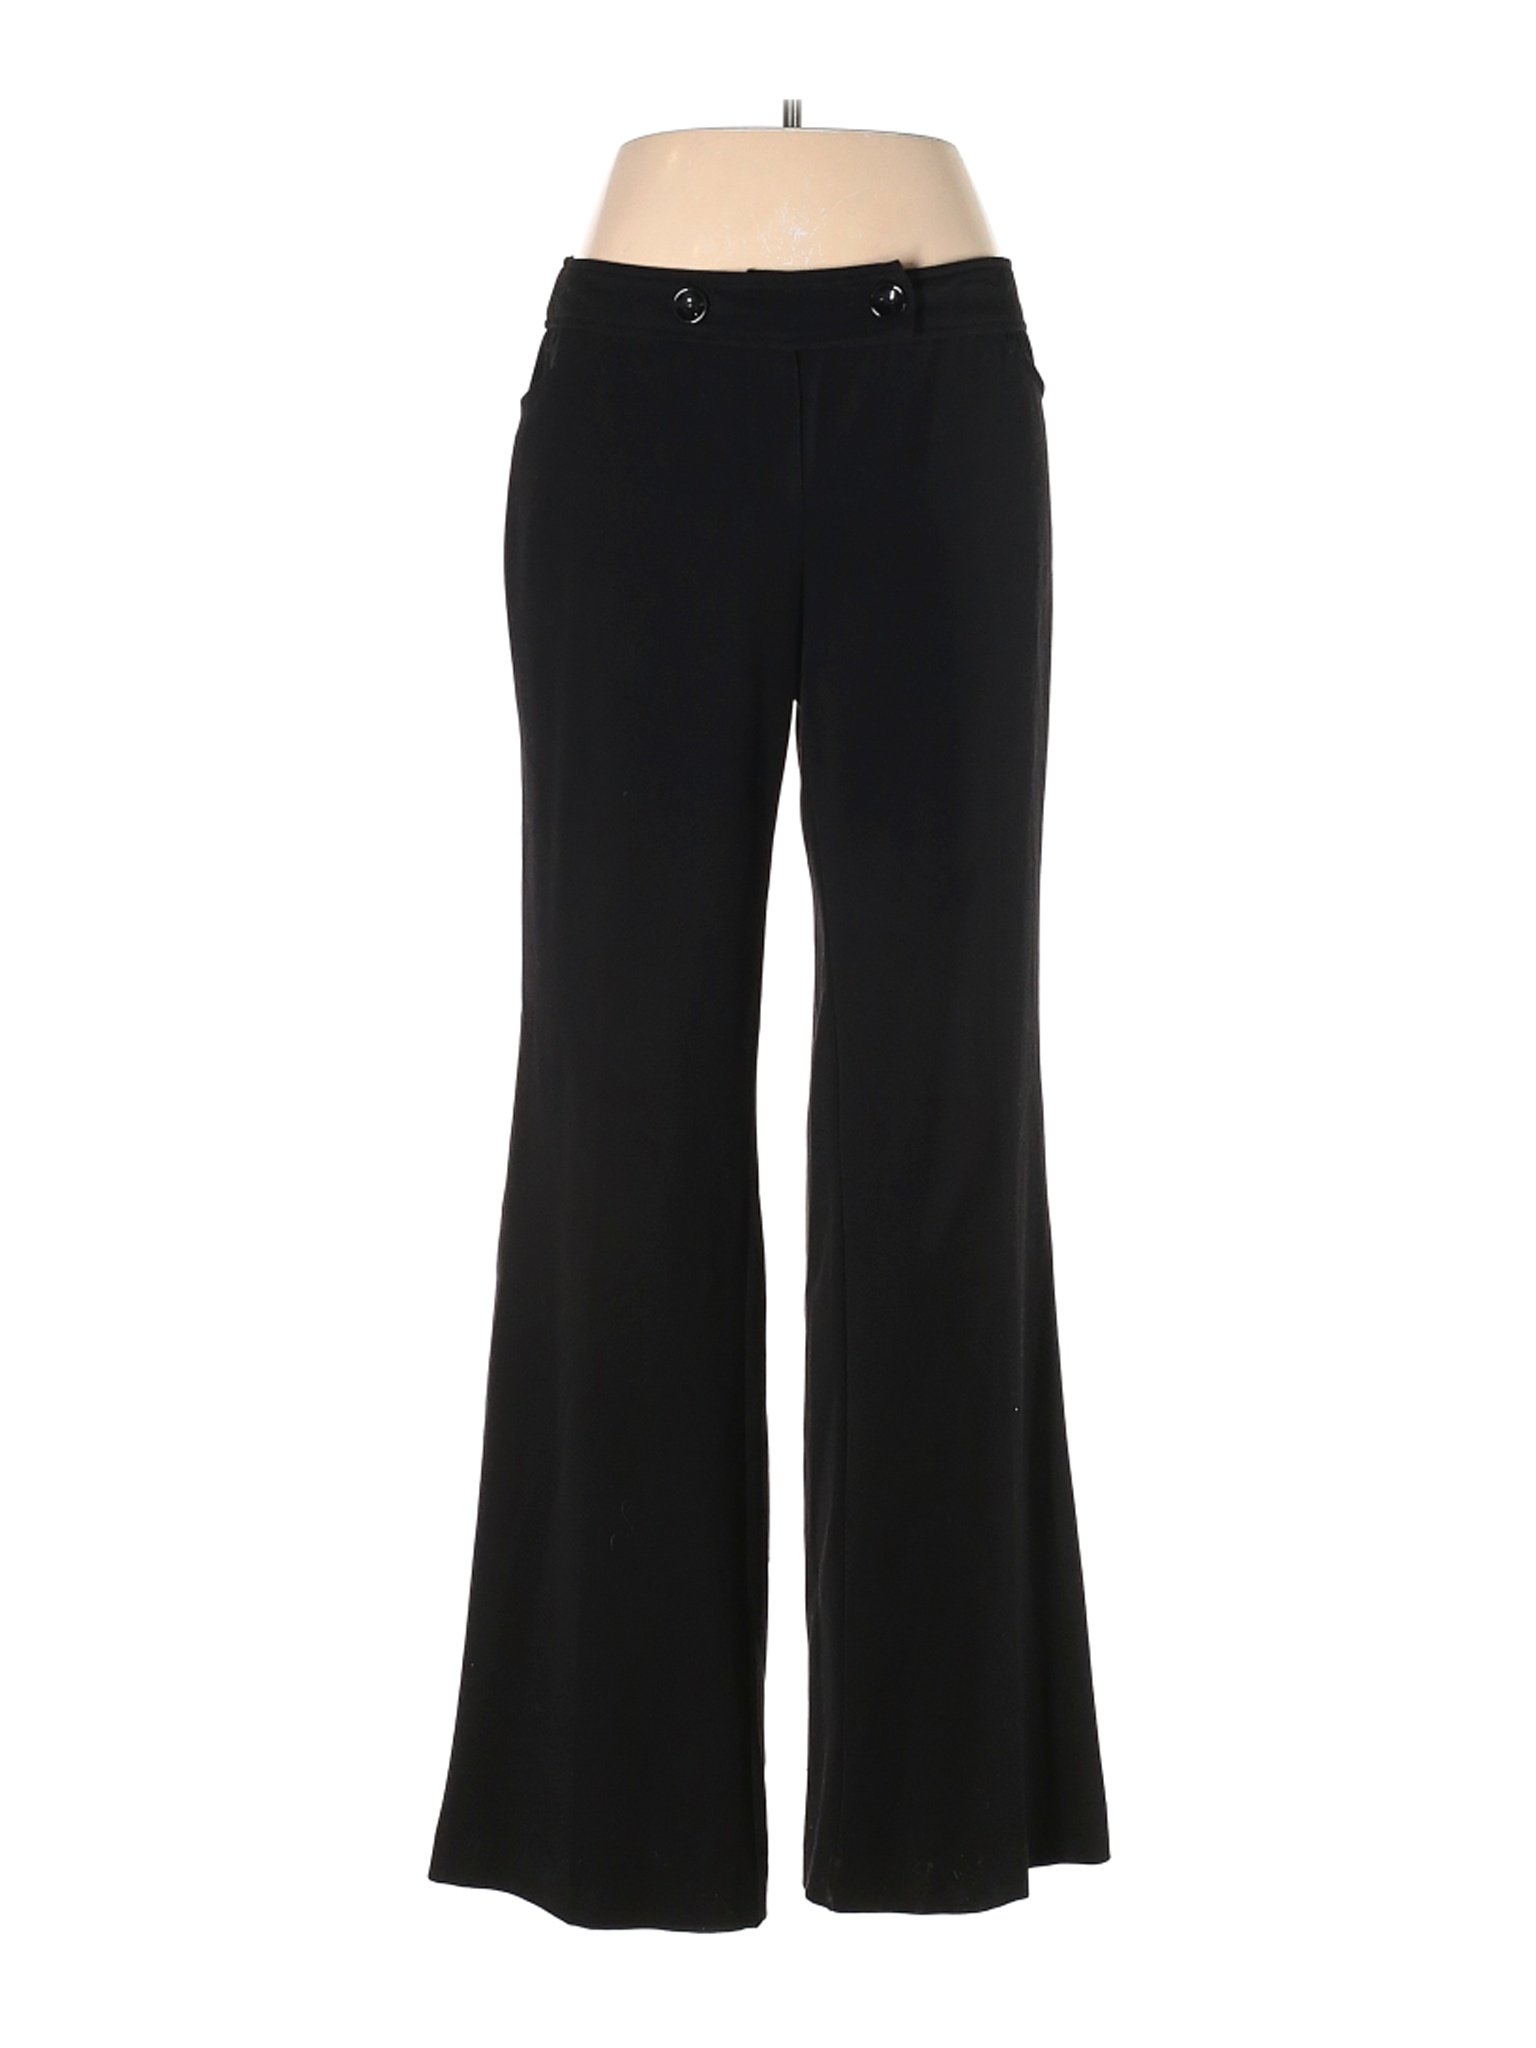 Bandolino Women Black Dress Pants 8 | eBay